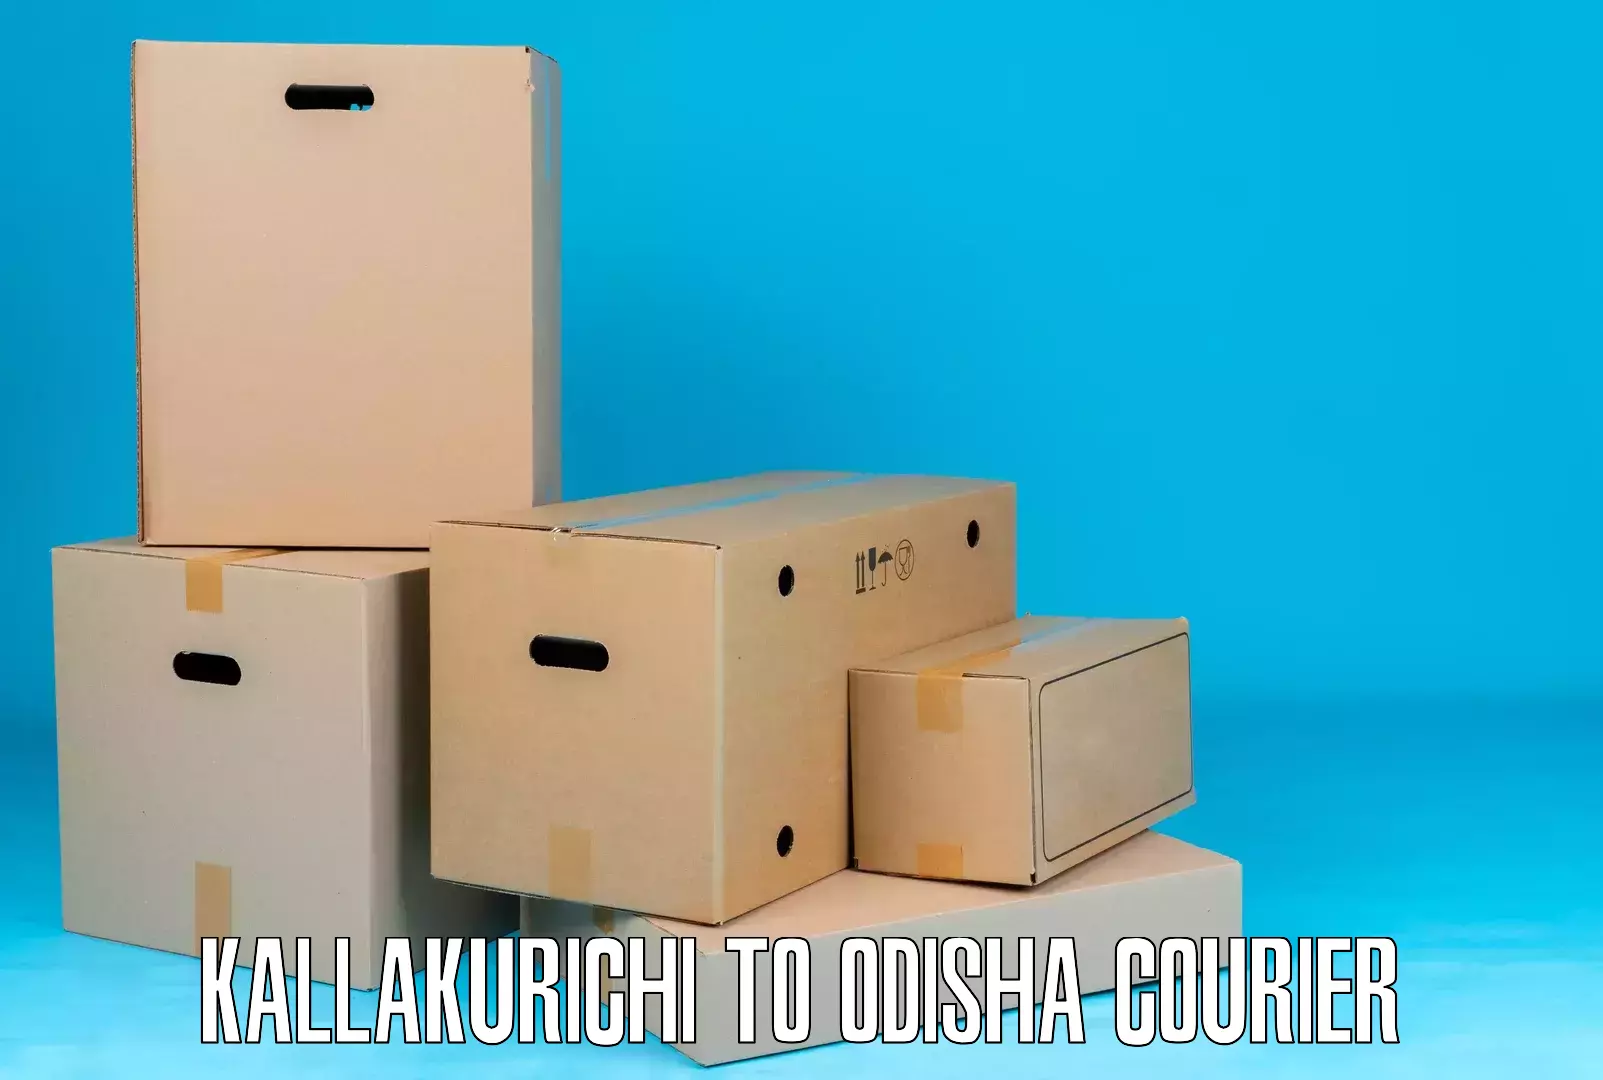 High-capacity courier solutions Kallakurichi to Rourkela